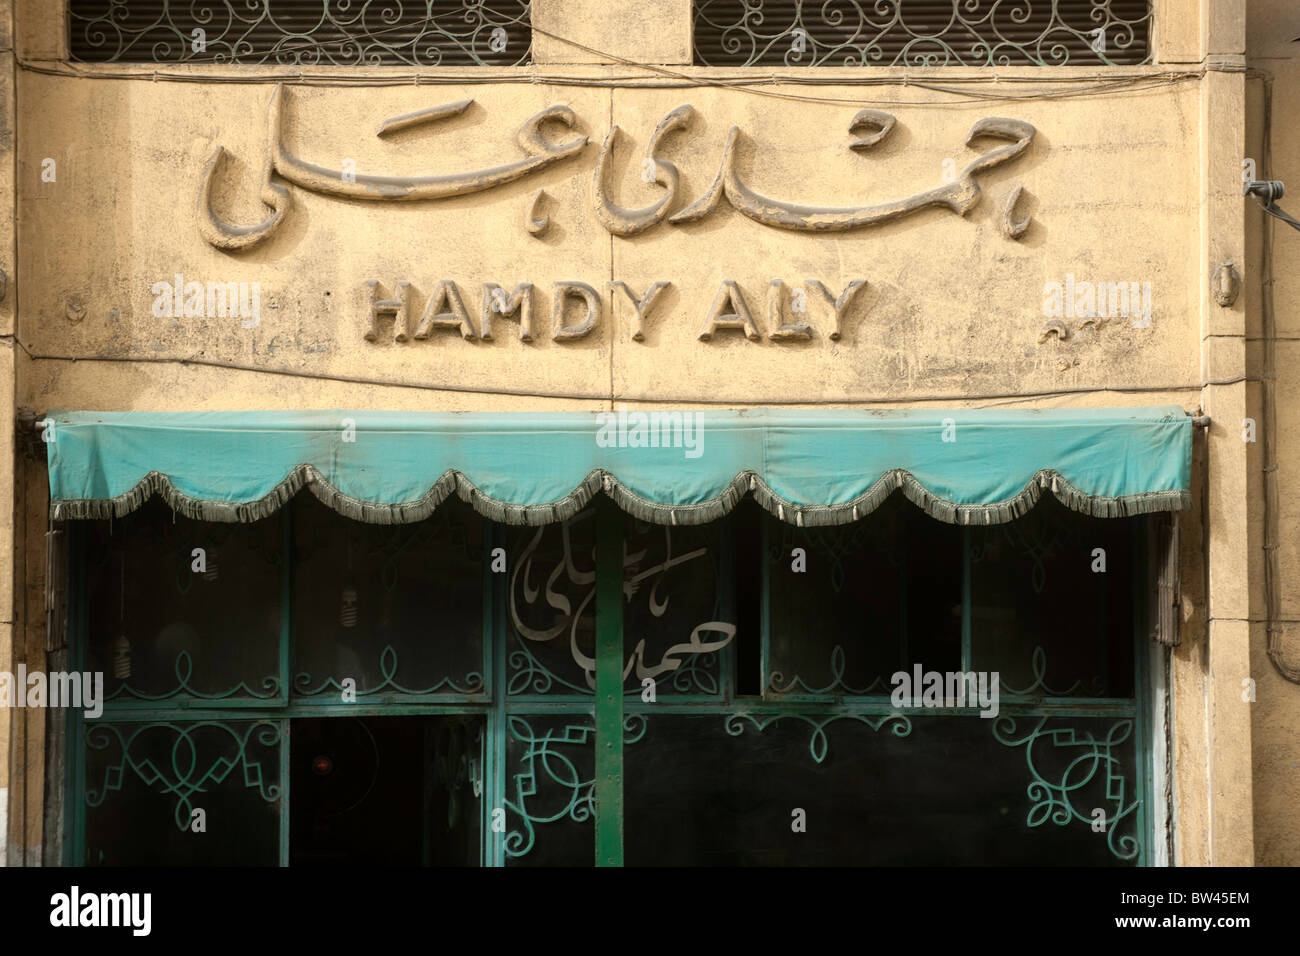 Aegypten, Kairo, Hamdy Ali Foto de stock